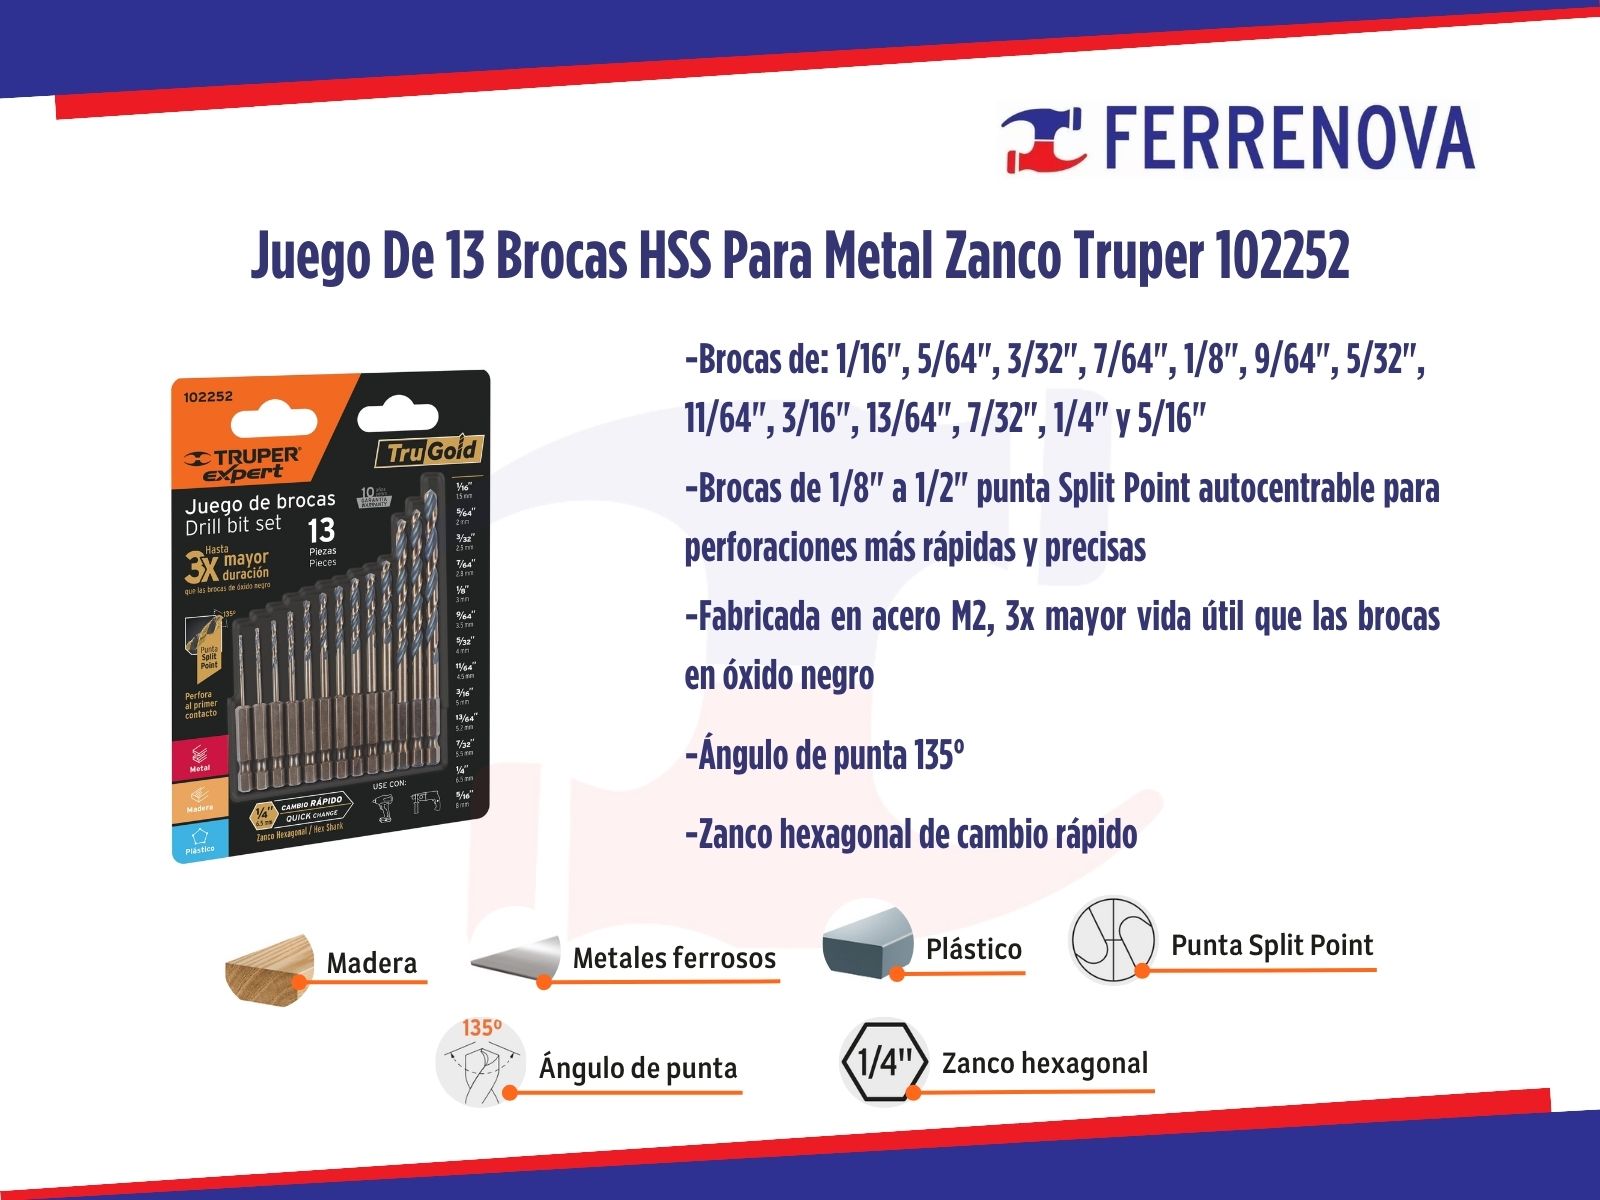 Juego De 13 Brocas HSS Para Metal Zanco Truper 102252